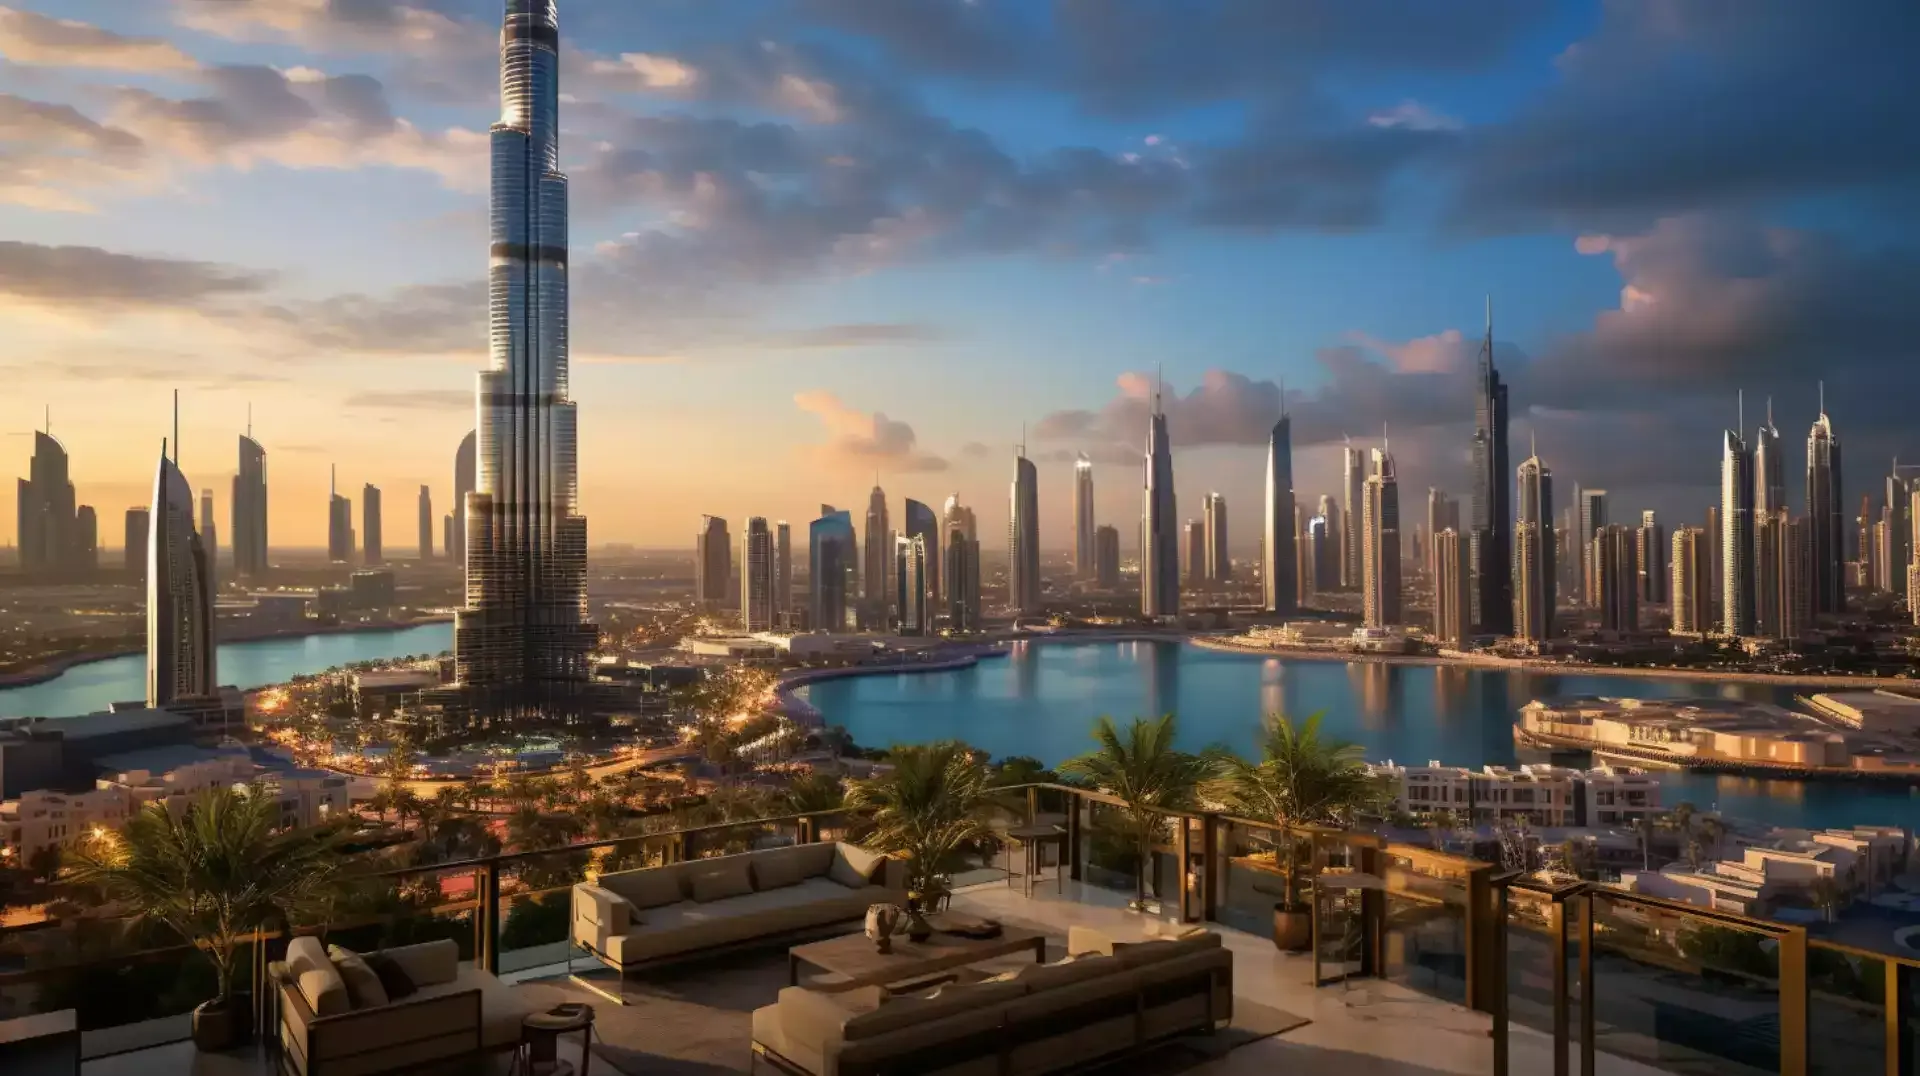 Visual representation of the advantages of investing in Dubai's real estate market